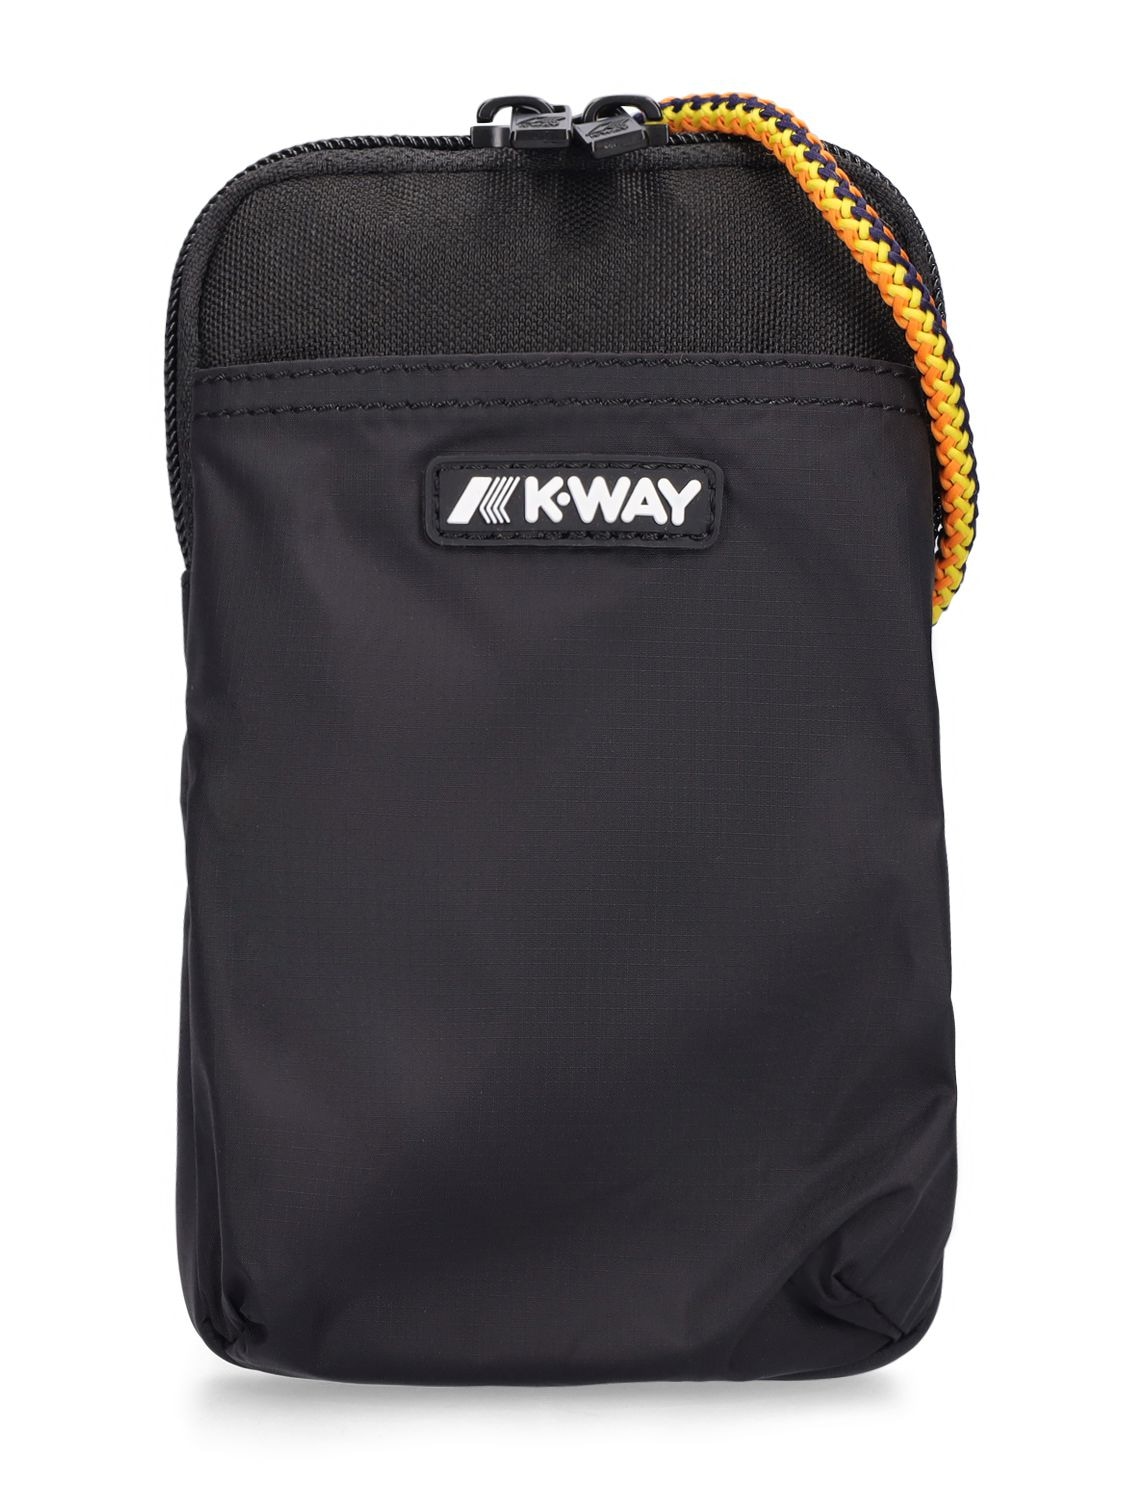 K-way Vitree Crossbody Bag In Black